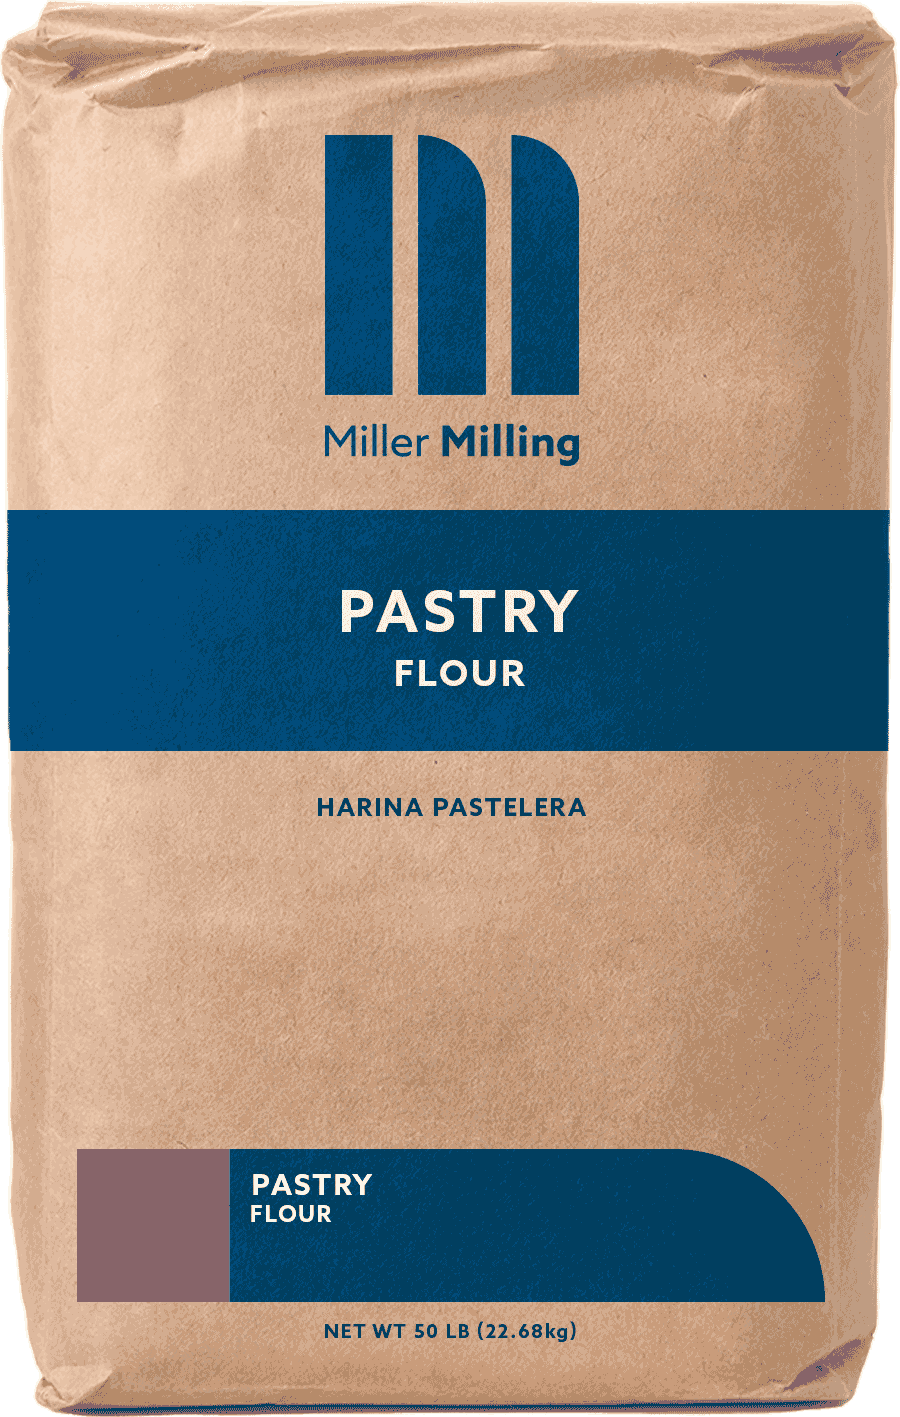 Pastry flour